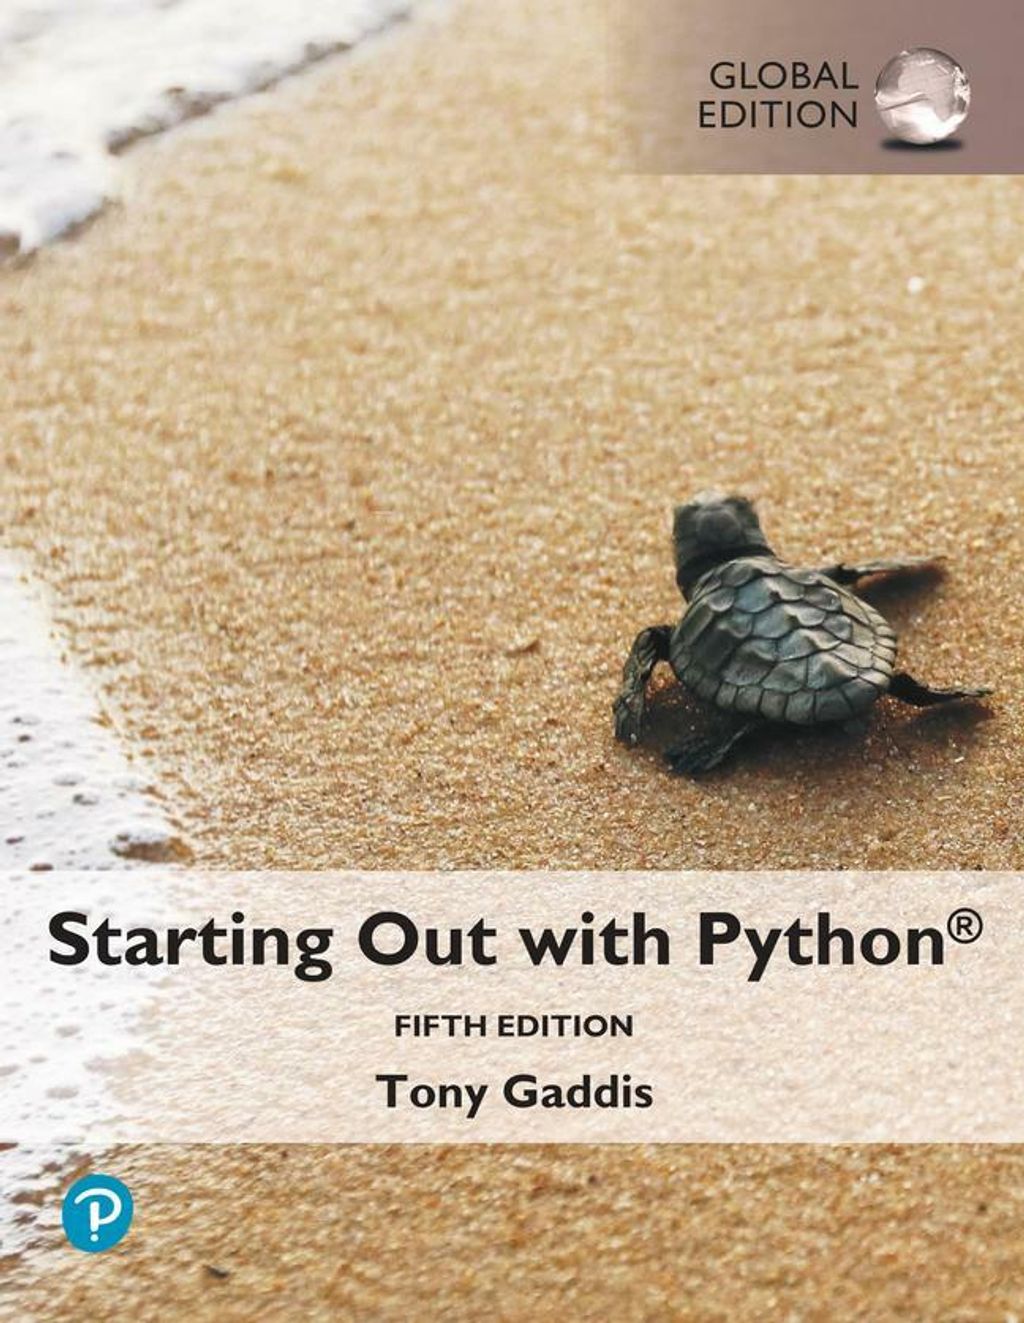 9781292408637 Starting Out with Python Gaddis 5E.jpg